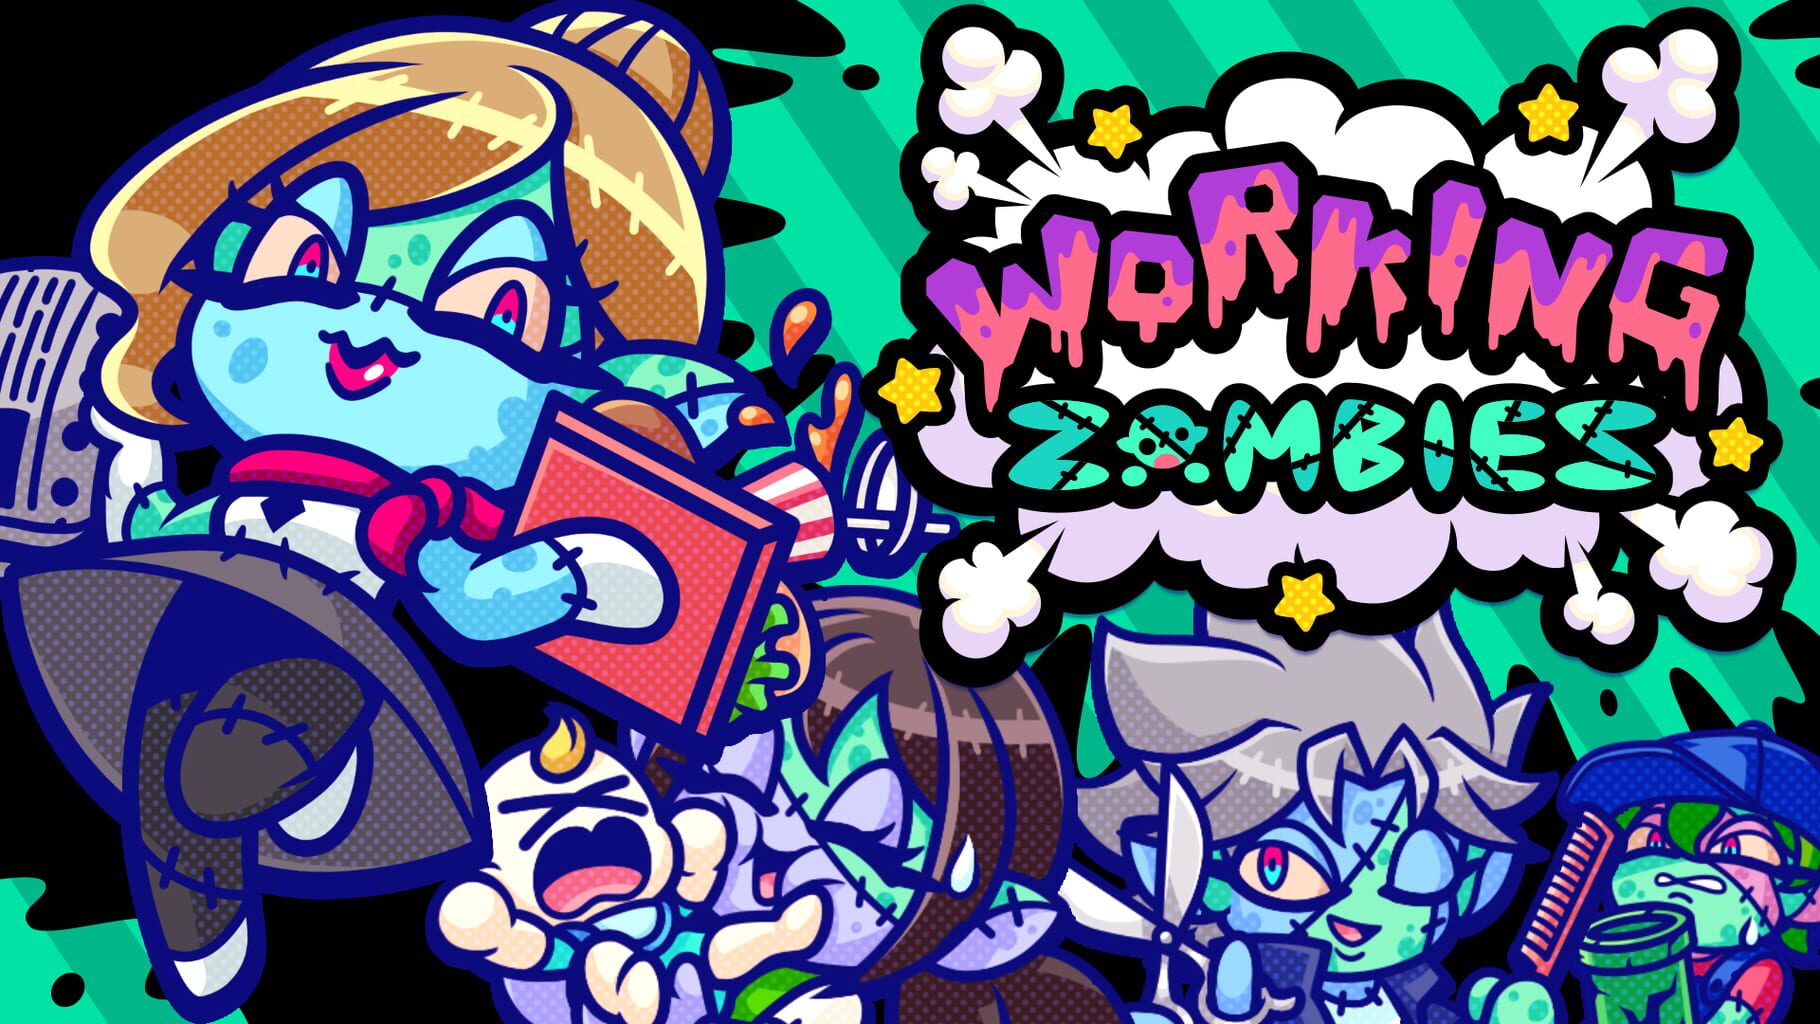 Working Zombies artwork